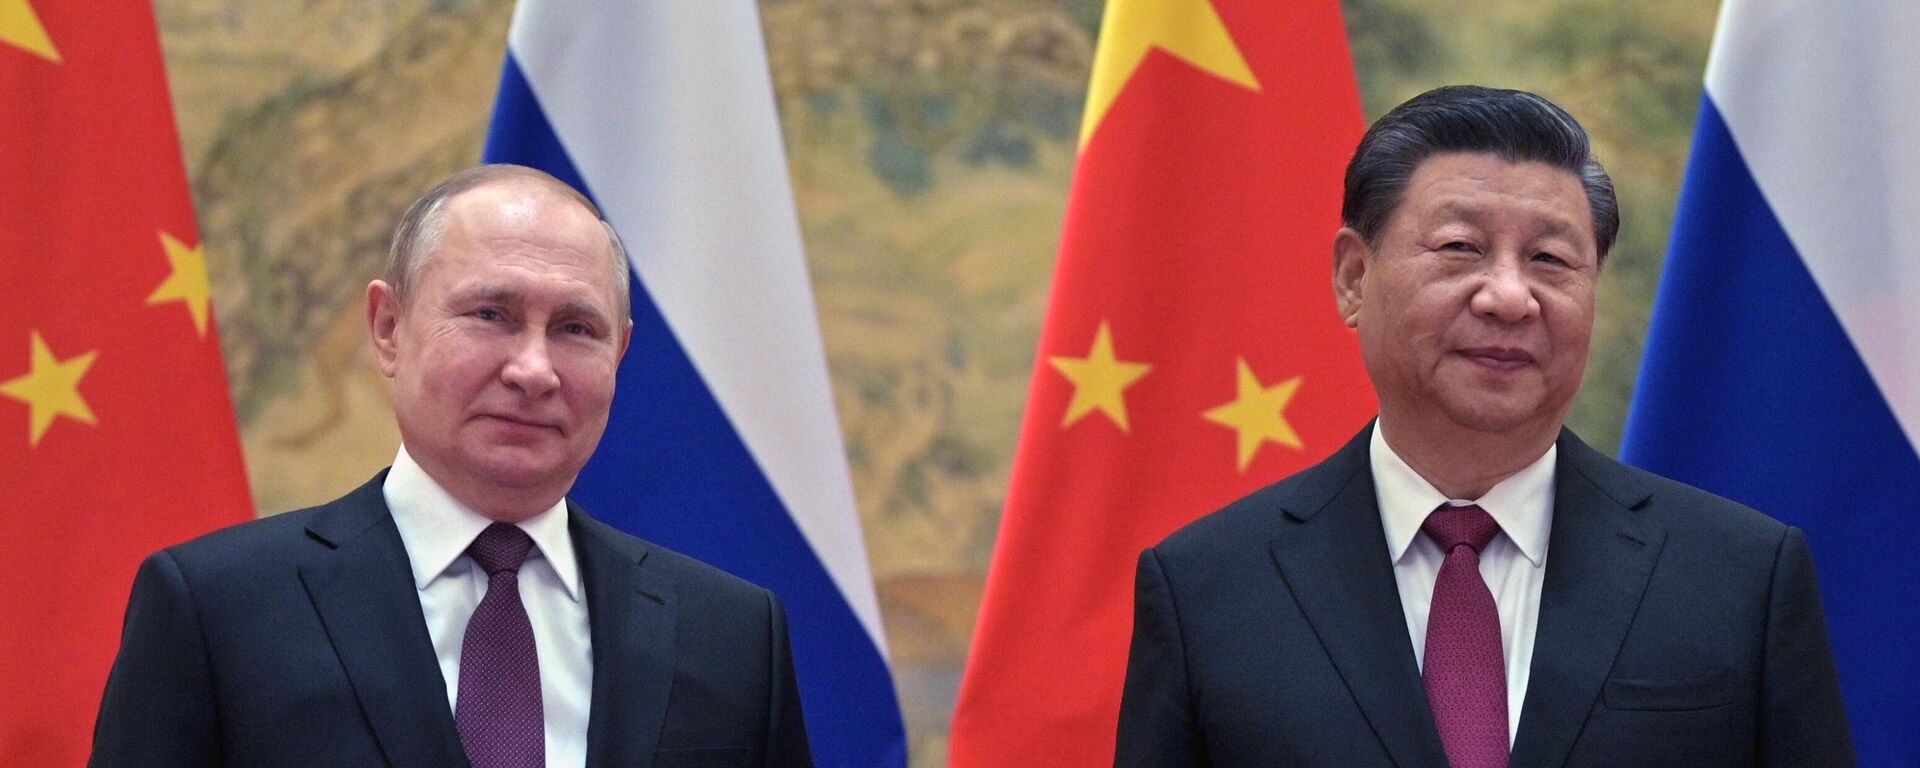 El presidente de Rusia, Vladímir Putin, llegó a Pekín para reunirse con su homólogo chino, Xi Jinping - Sputnik Mundo, 1920, 04.02.2022